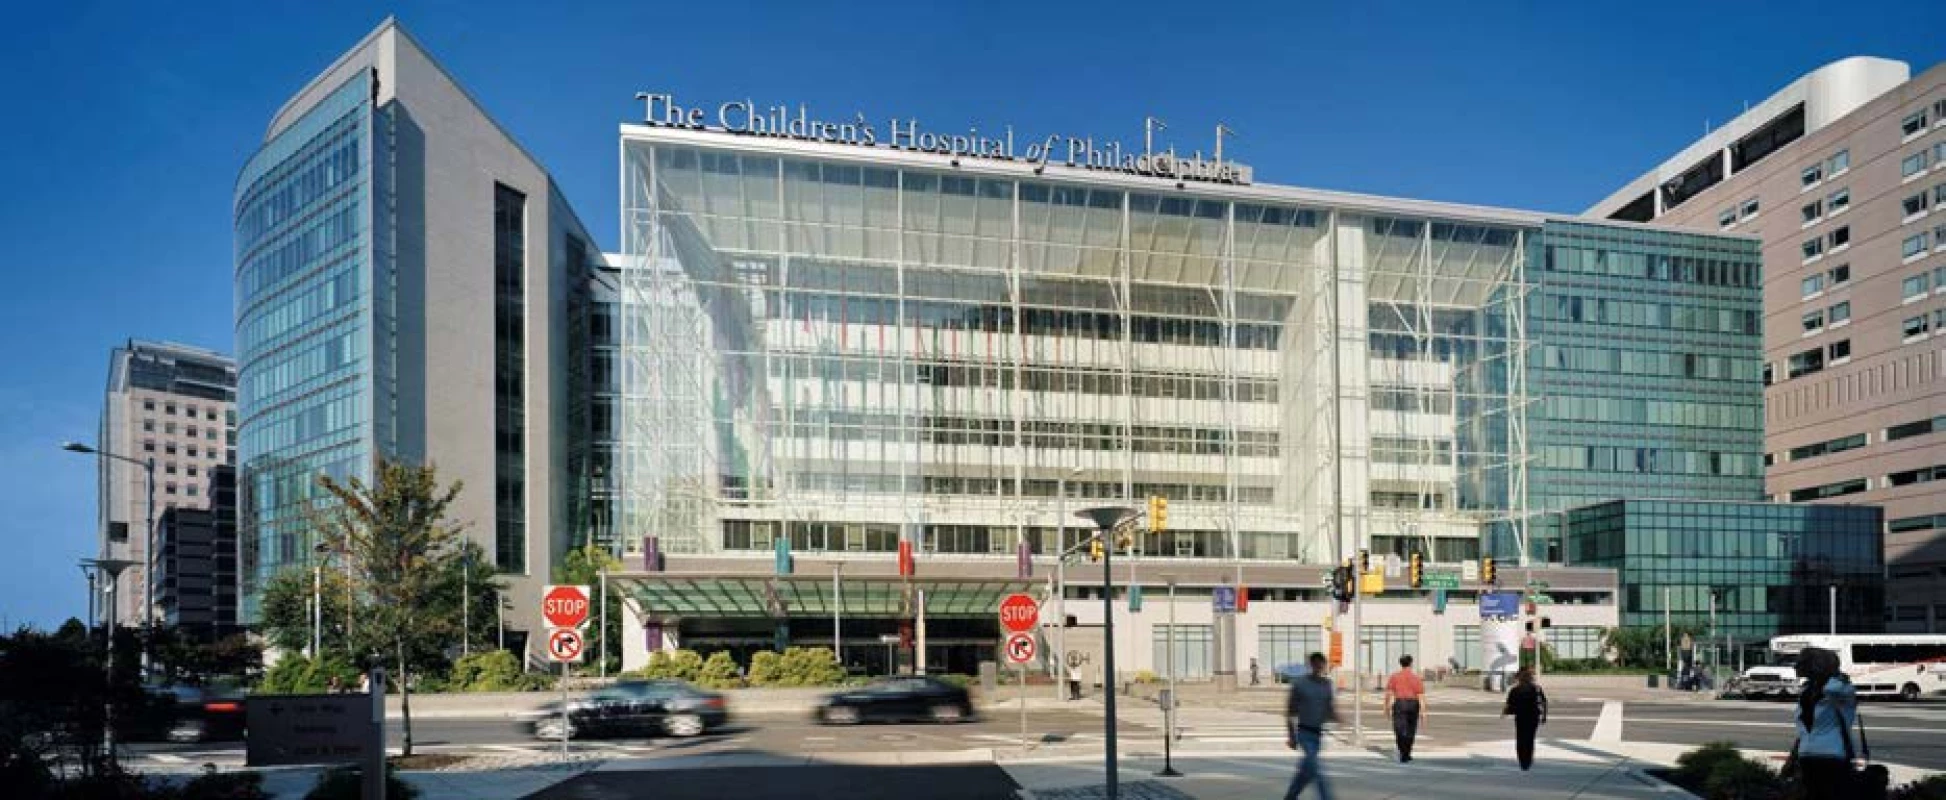 Nemocnice Children´s Hospital of Philadelphia z ulice<br>
Fig. 1. Children´s Hospital of Philadelphia from the street view